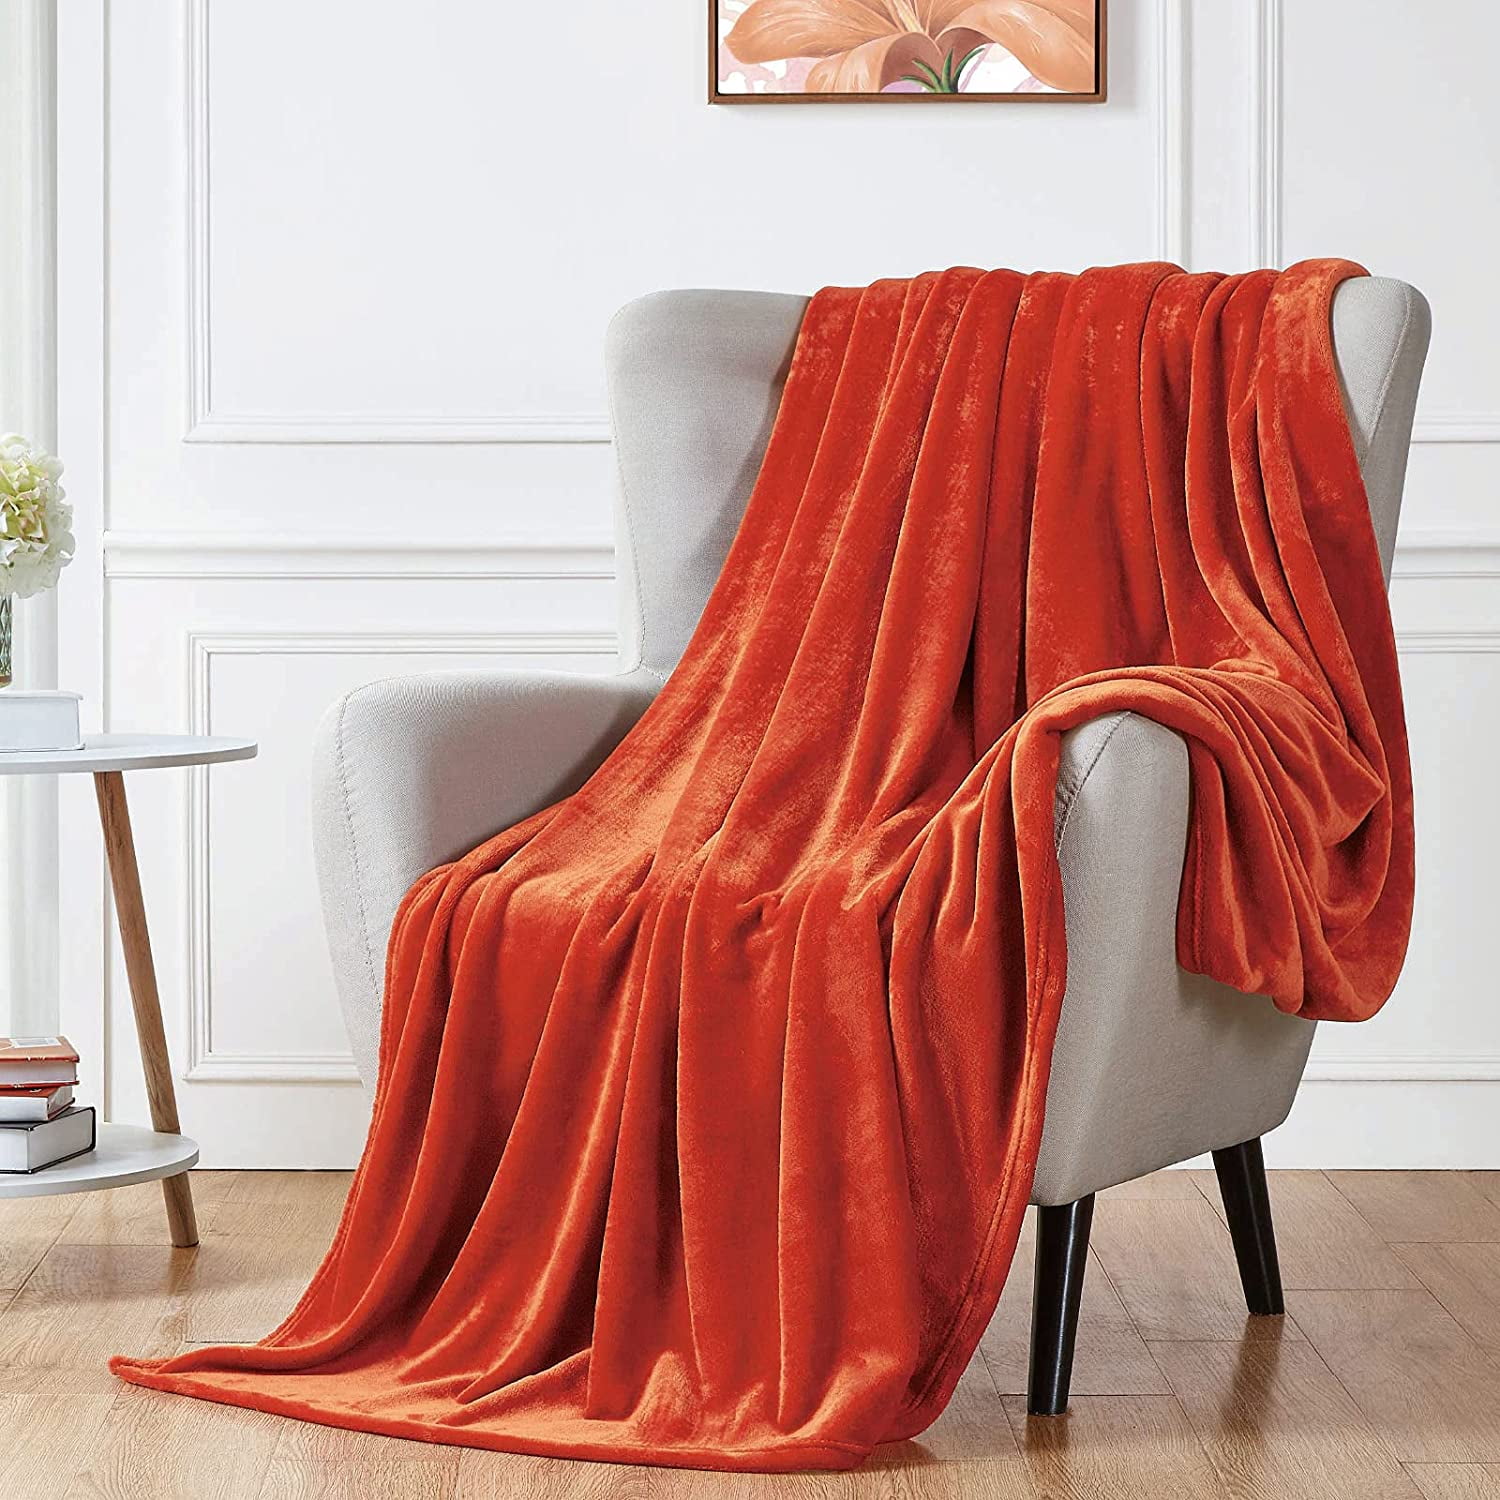 Walensee Ultra Soft Microplush Fleece Throw Blanket, 90 x 90